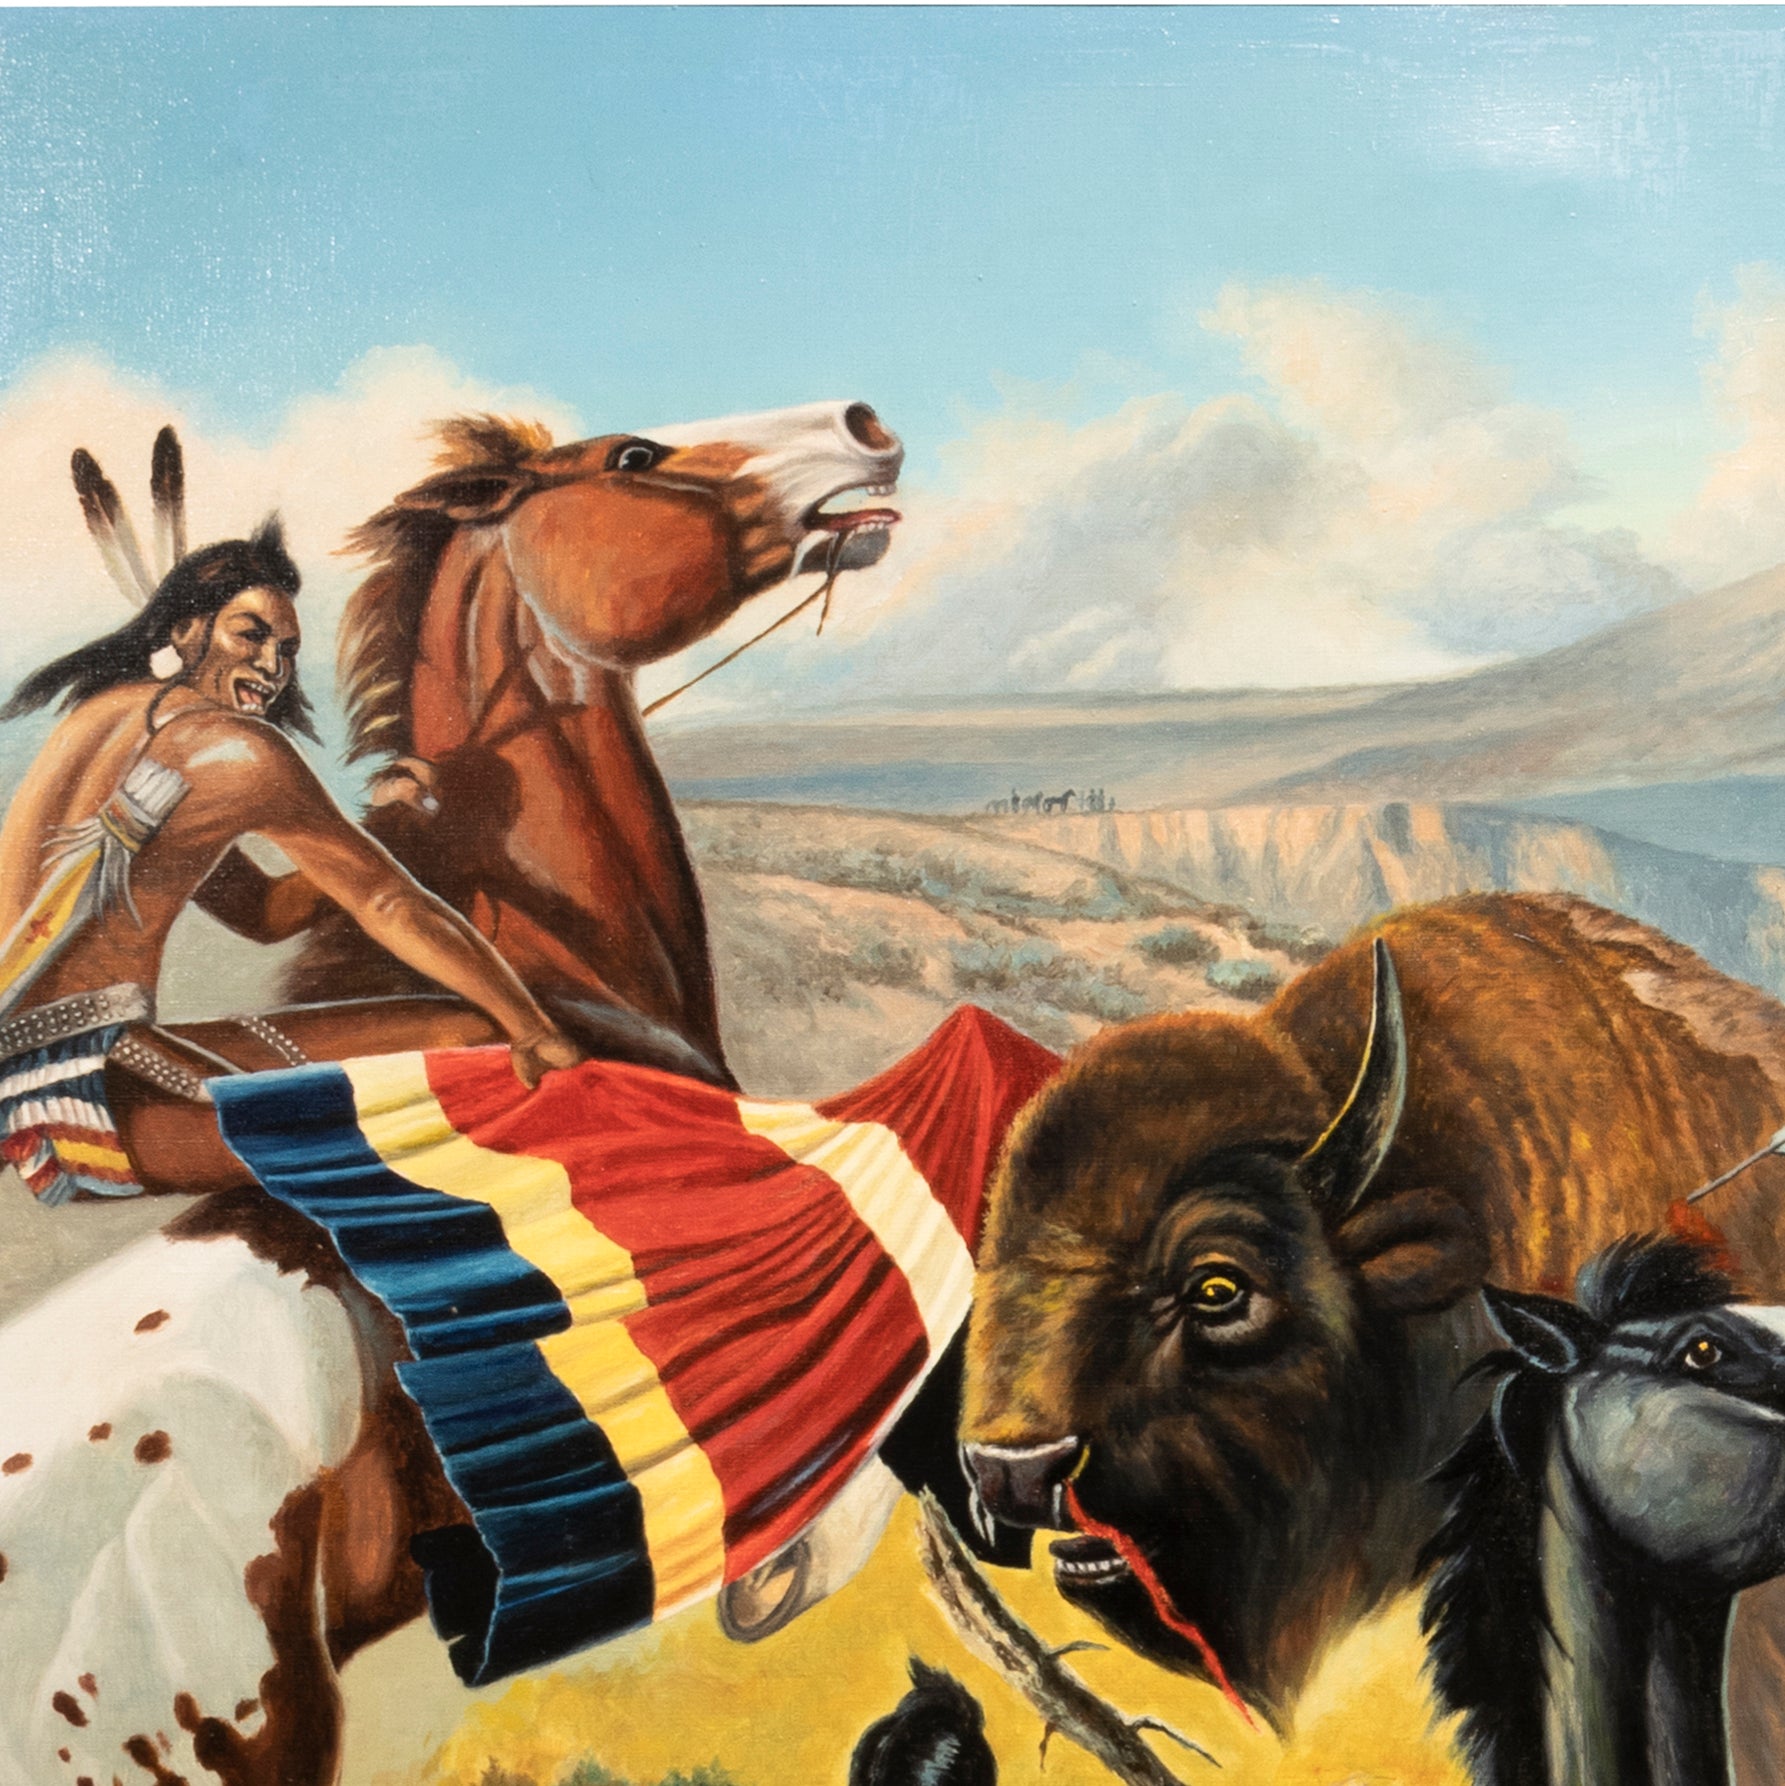 "Crow Buffalo Hunt" by Charles Damrow